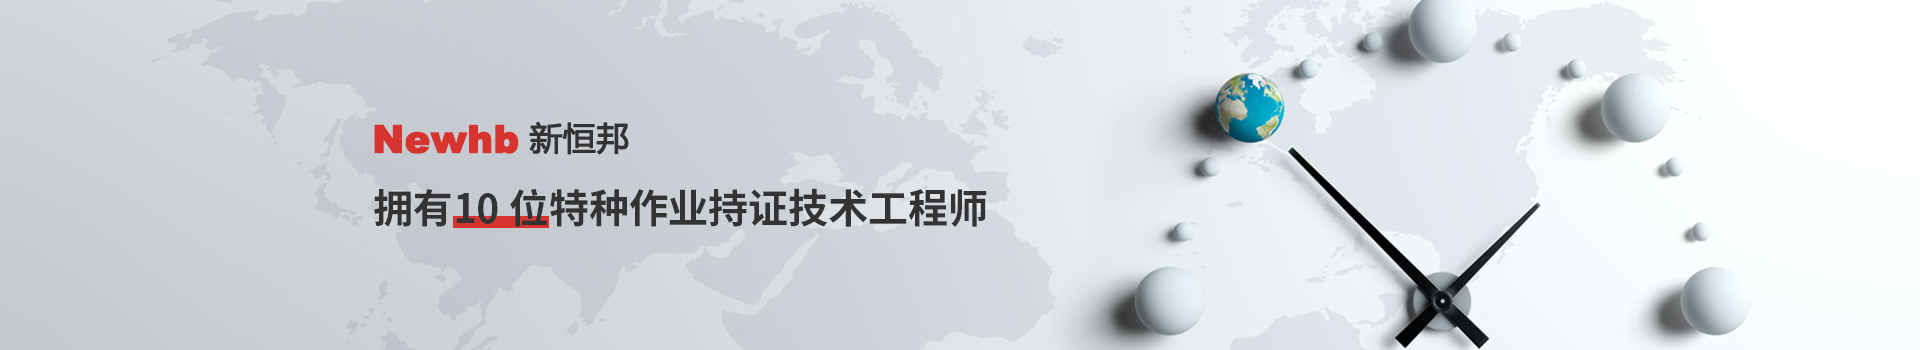 Newhb中国有限公司官网拥有10位特种作业持证技术工程师